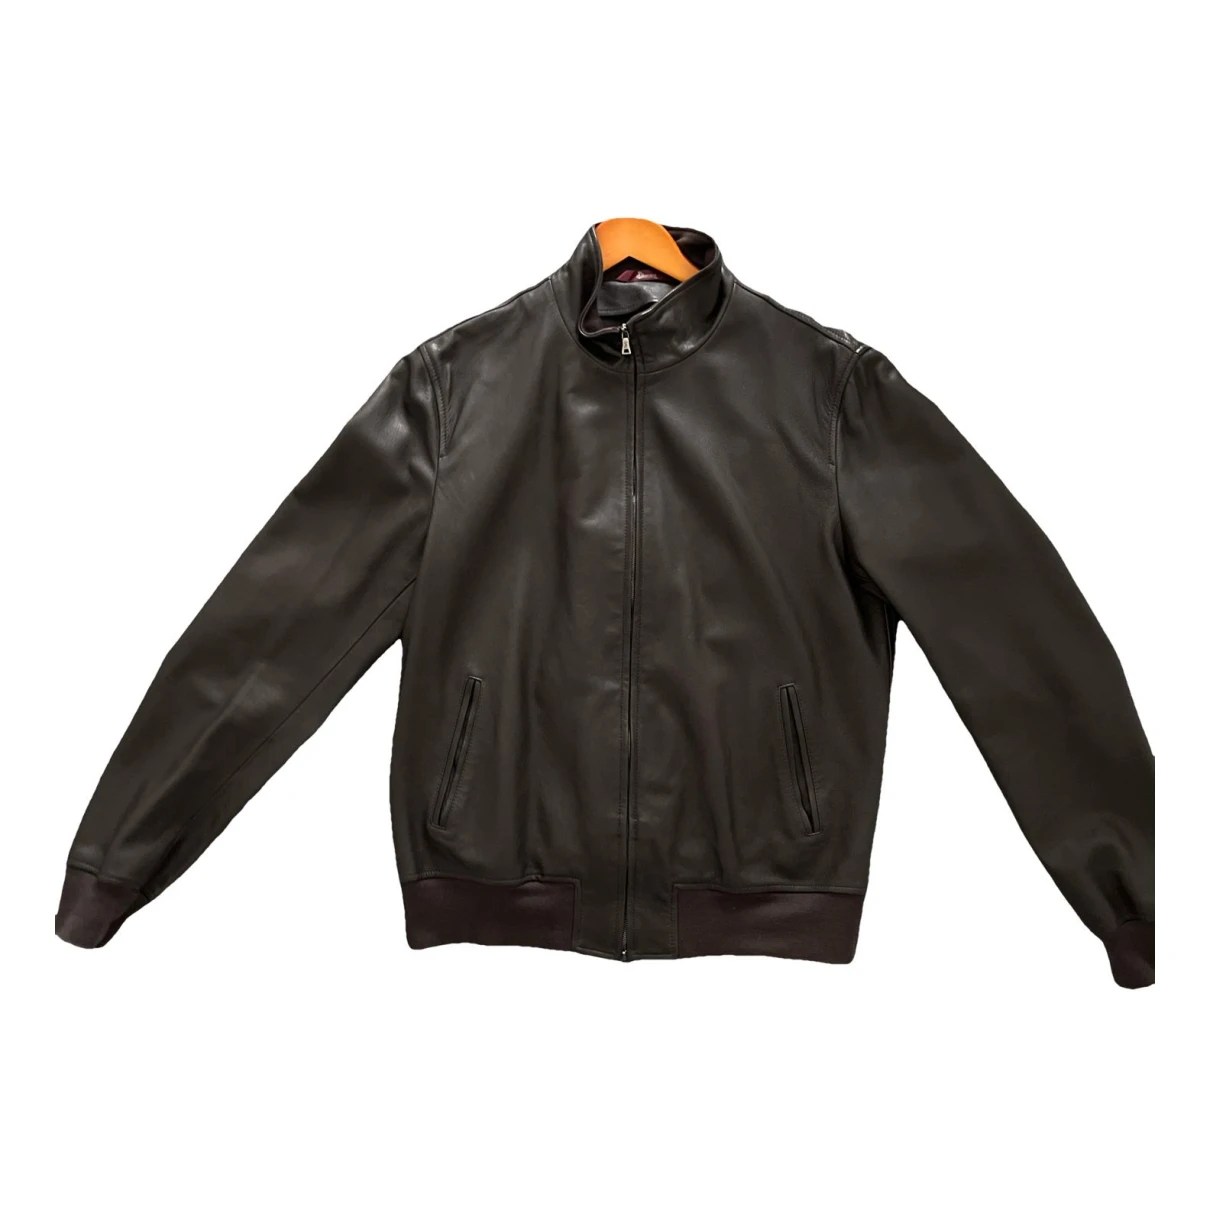 Pre-owned Loren Stewart Leather Jacket In Brown